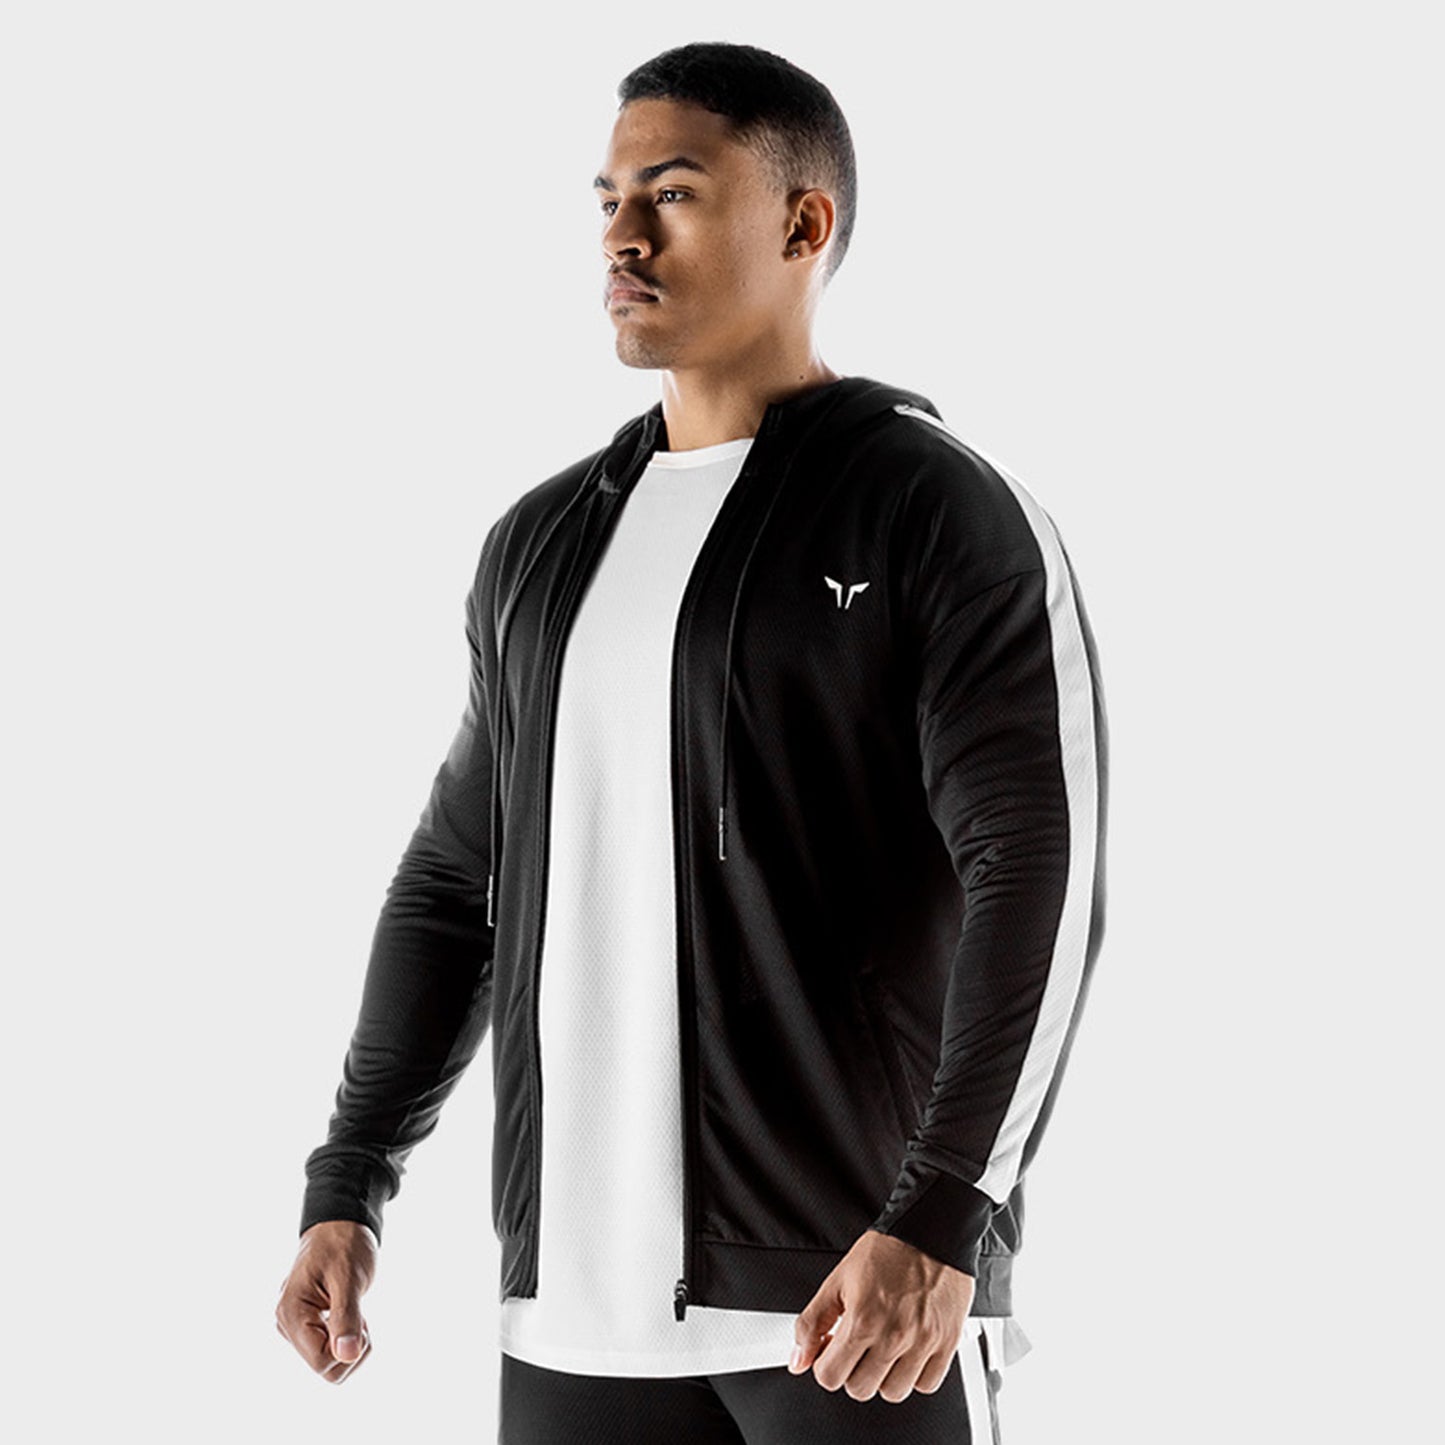 squatwolf-gym-wear-hybrid-zip-up-black-workout-hoodies-for-men